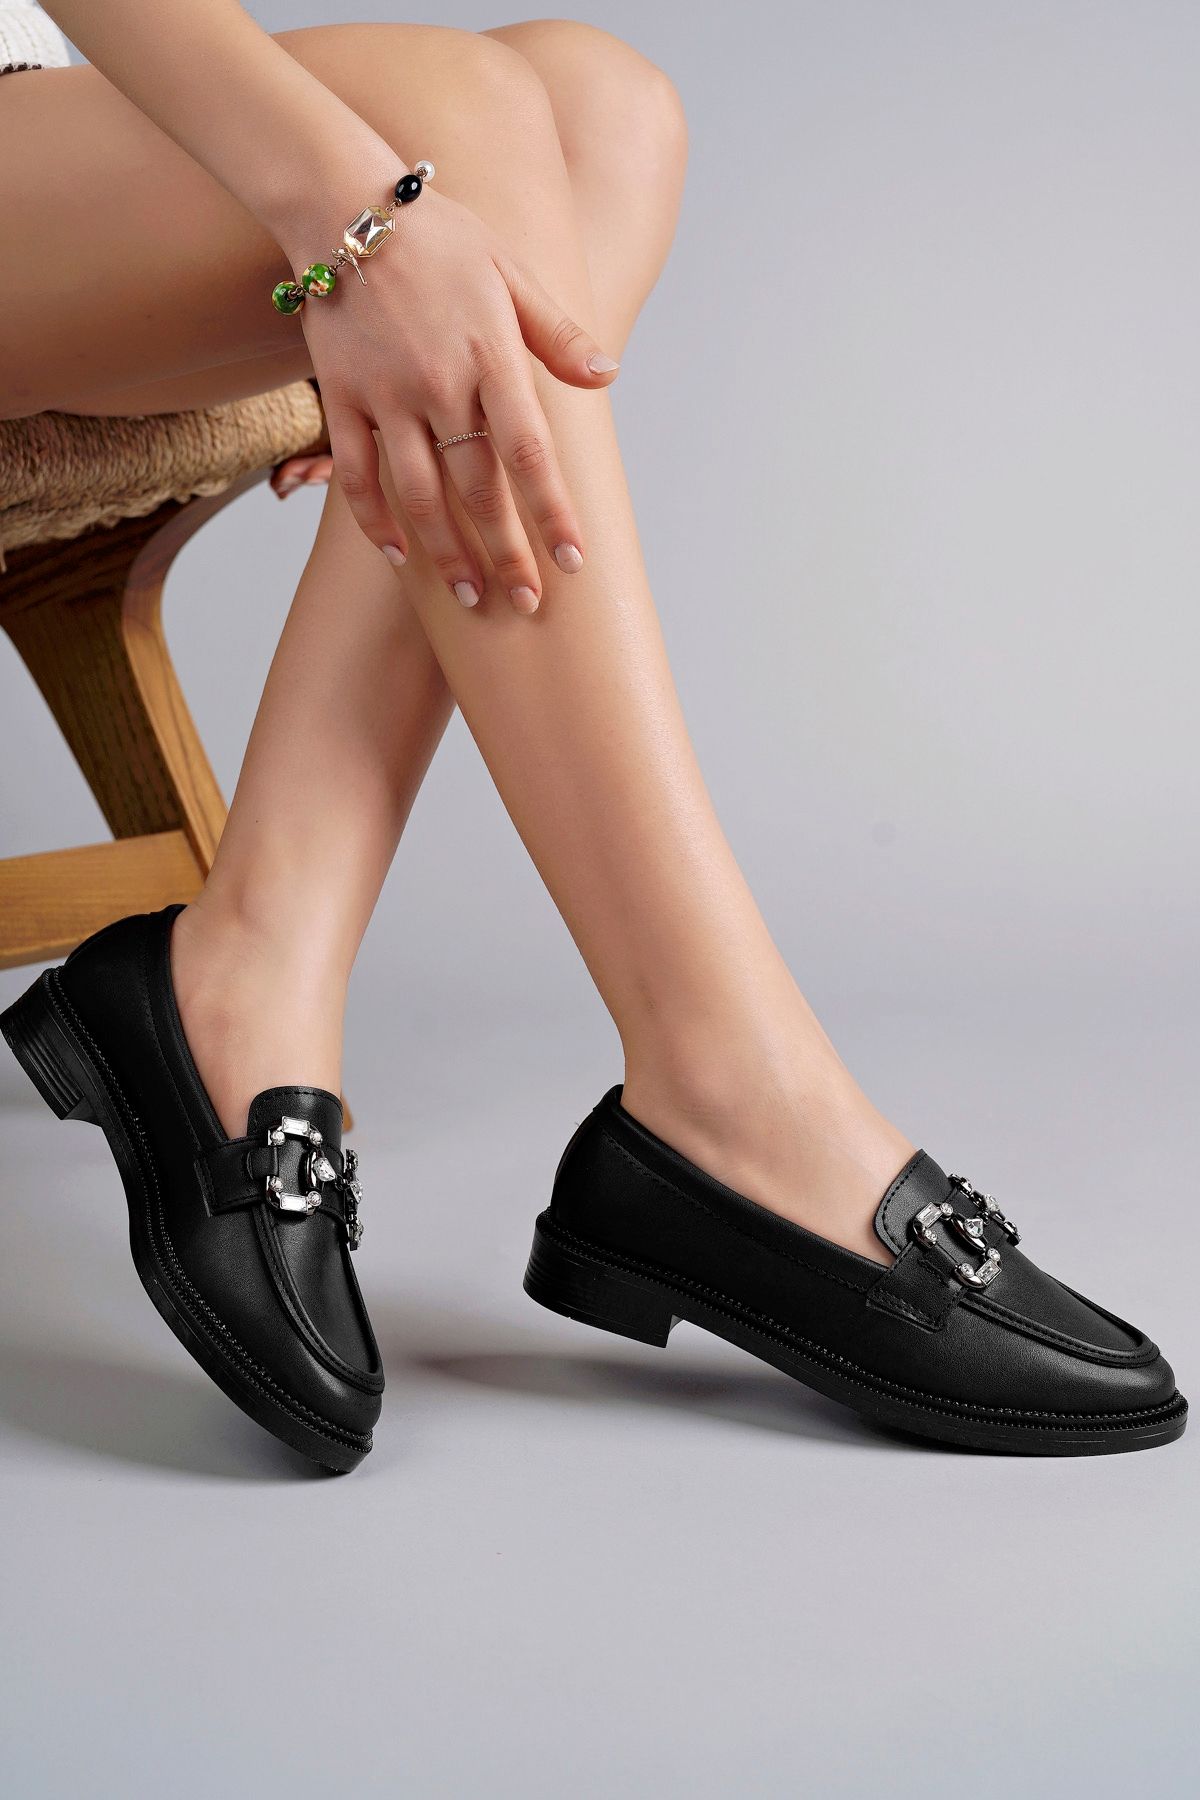 Freemax Kadın Anatomik Tasarım Taşlı Toka Oxford Loafer Ayakkabı Abb.2501 Siyah